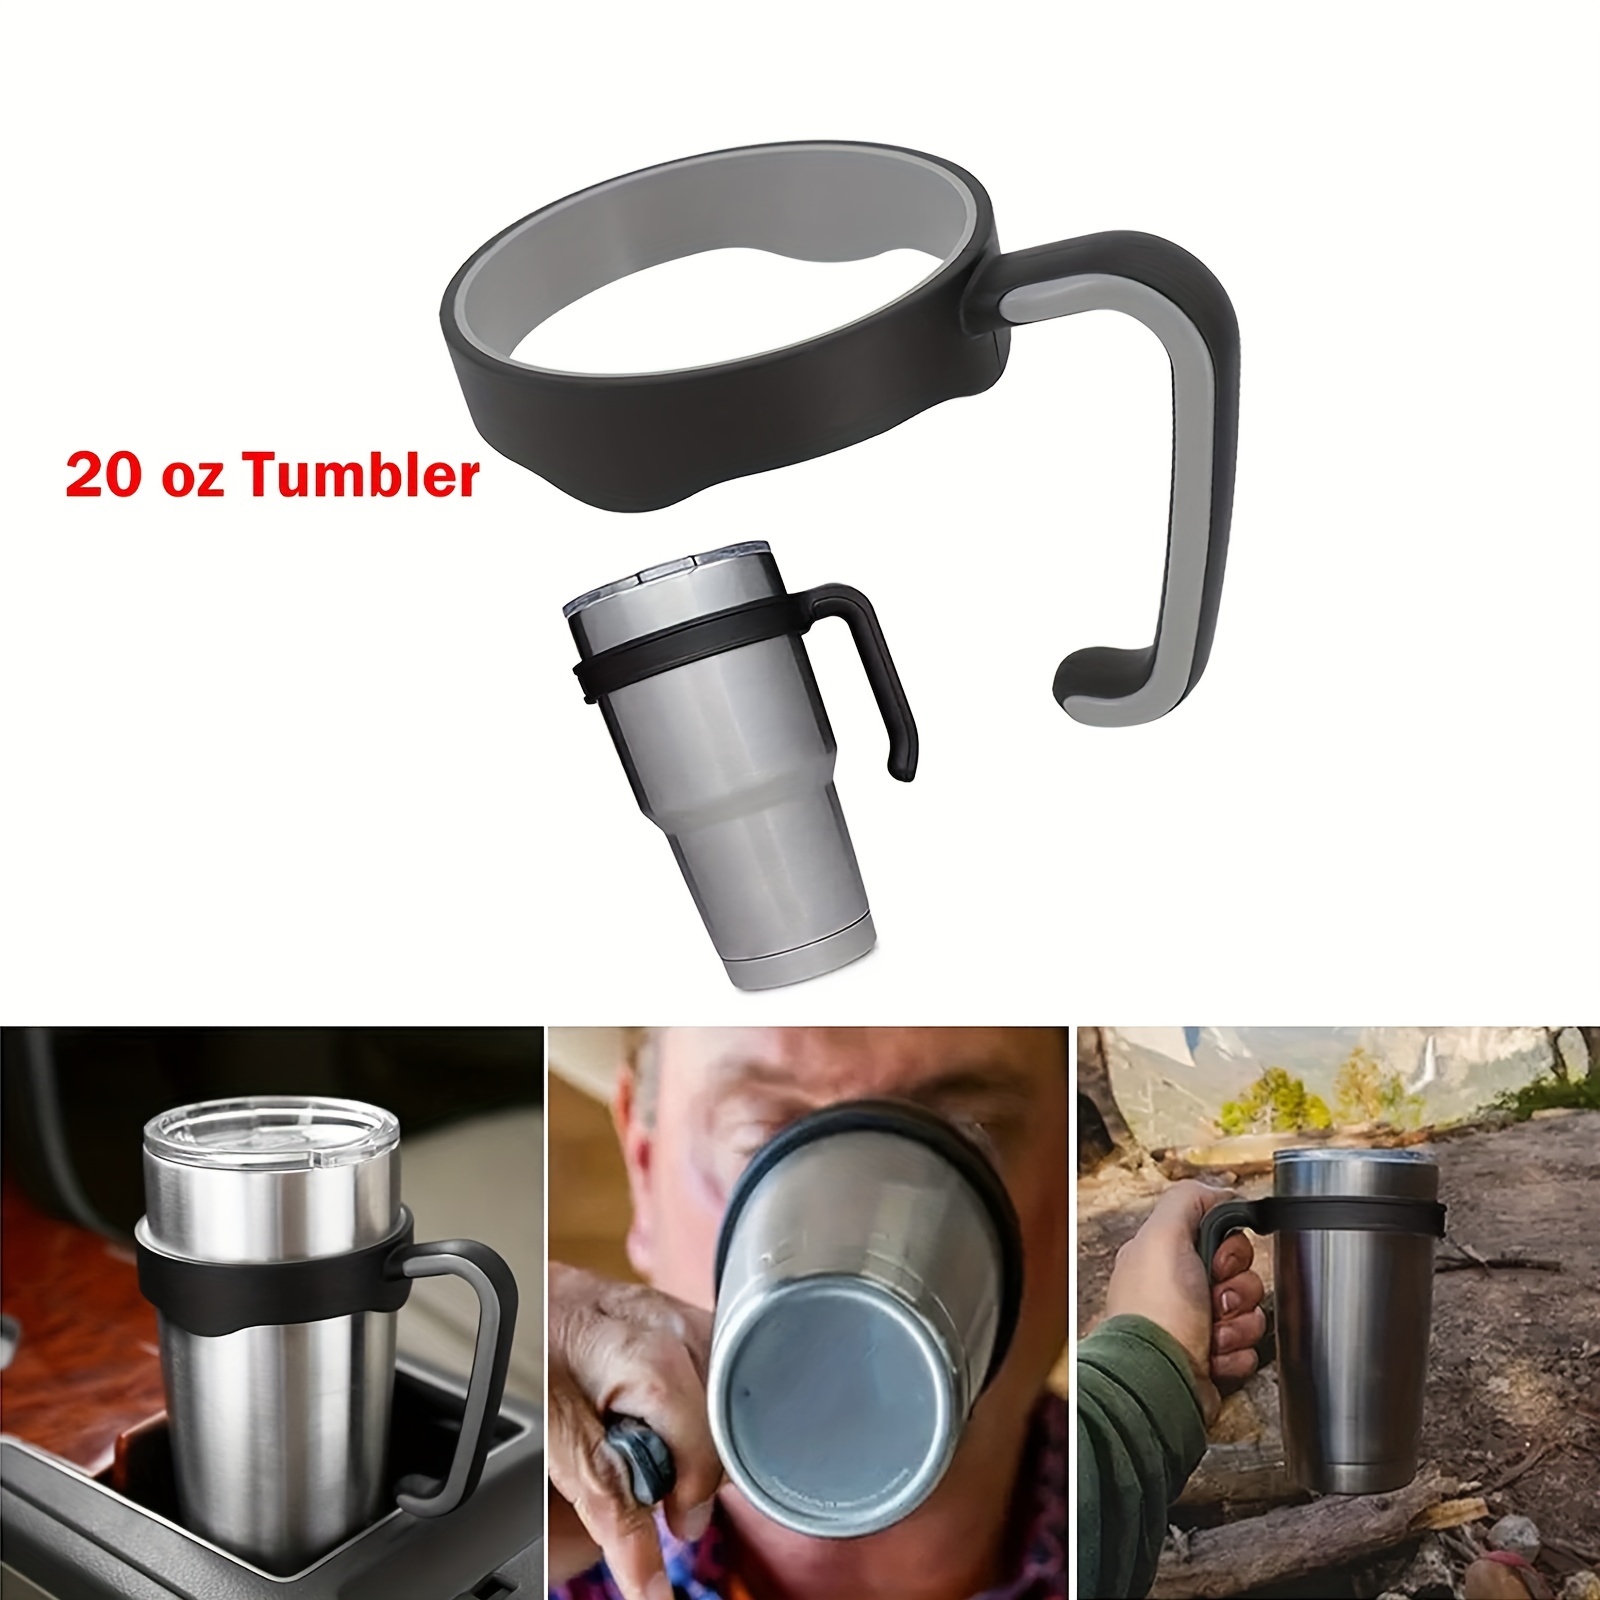 YETI 20 oz. Rambler Tumbler Cup Handle